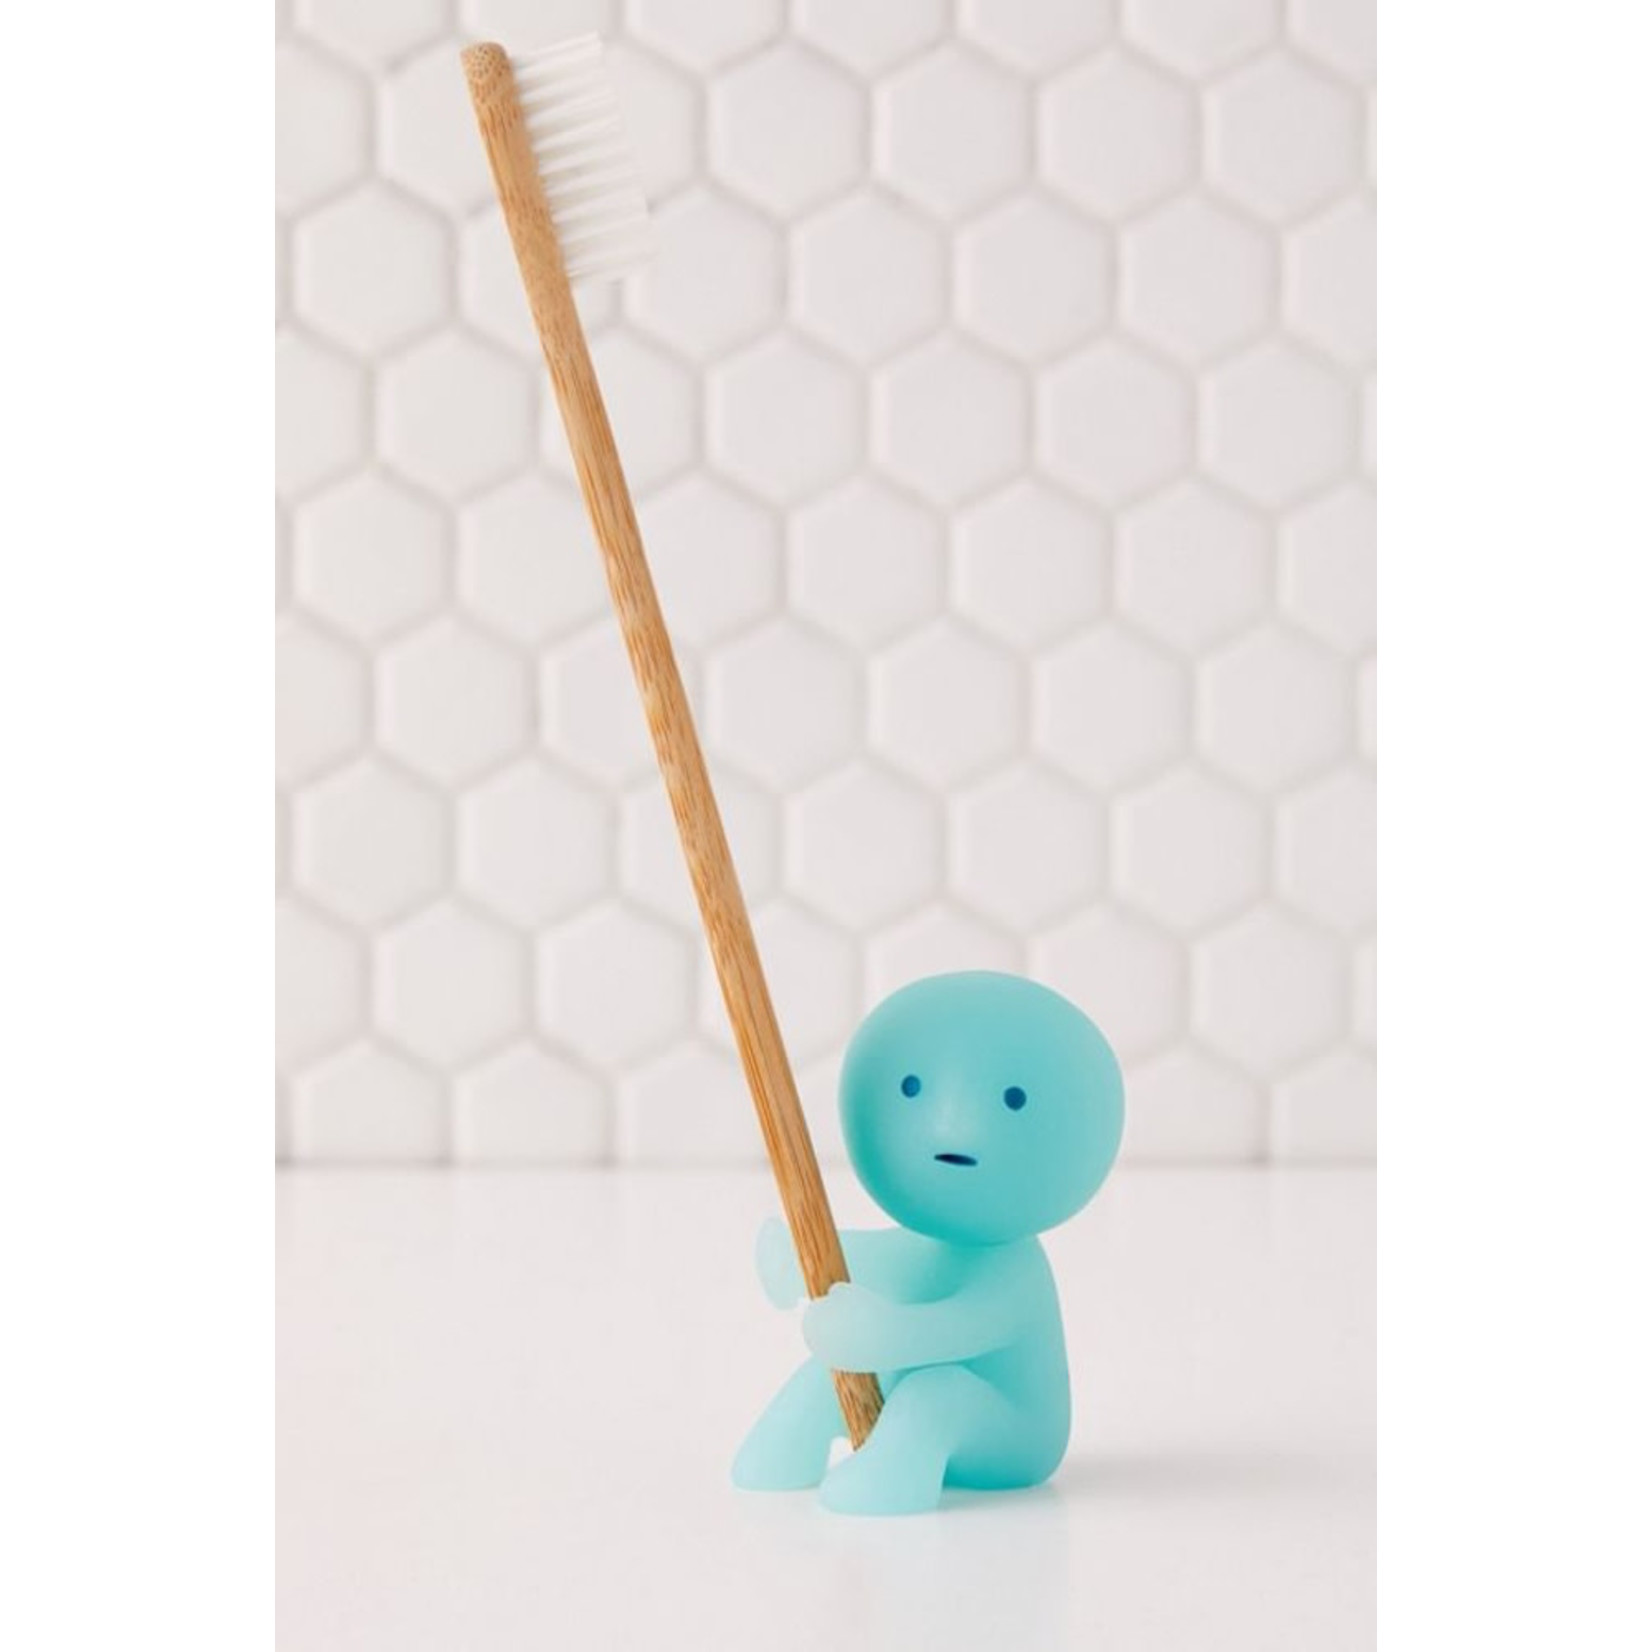 Dreams SMISKI Toothbrush Stand - Protecting